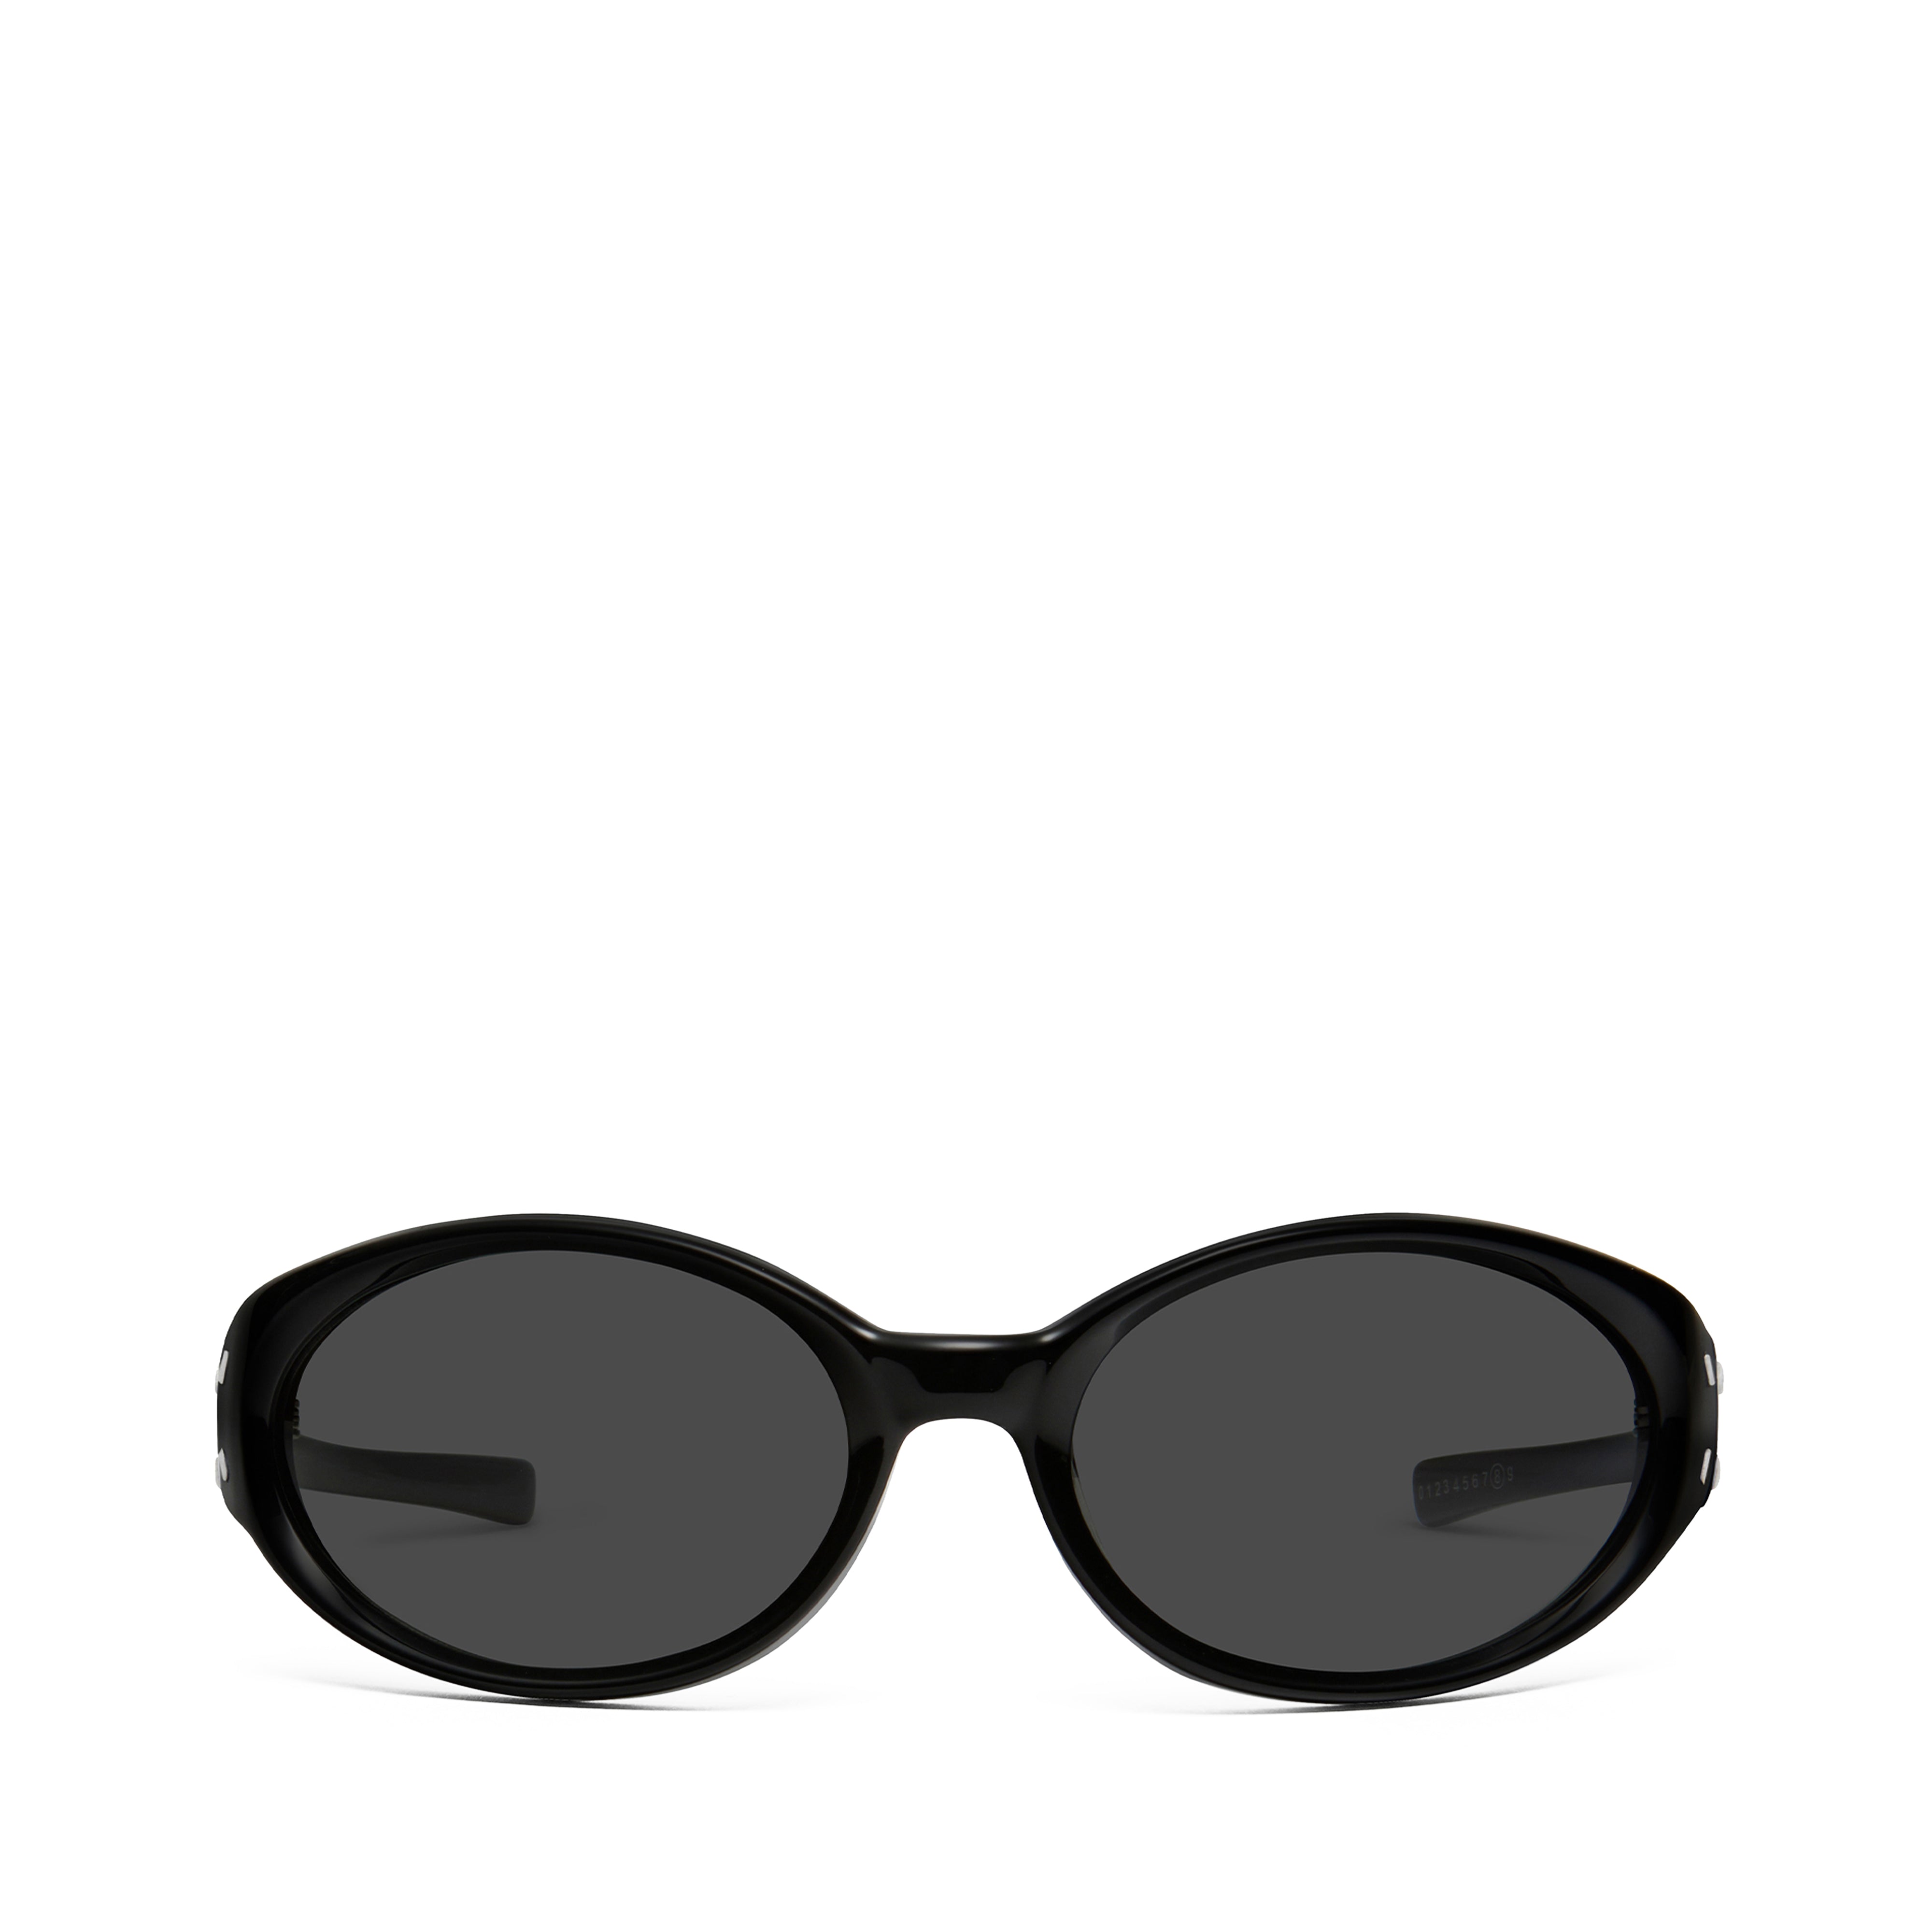 Maison Margiela x Gentle Monster - MM104-01 Sunglasses - (Black 